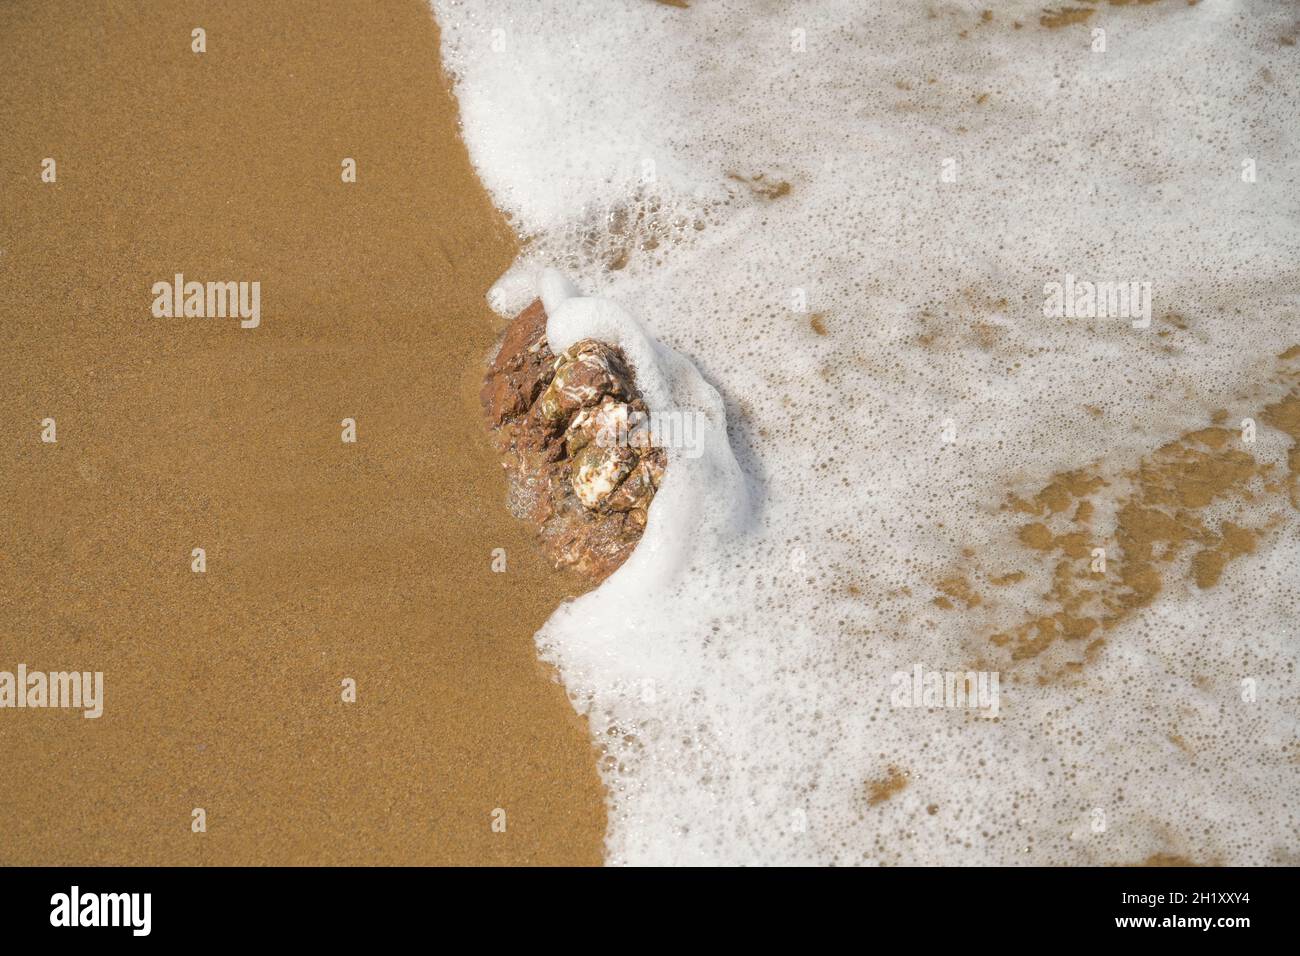 Sandstrand, Welle, Sand Wasser, Strand, Kissamos, Kreta, Griechenland Foto Stock